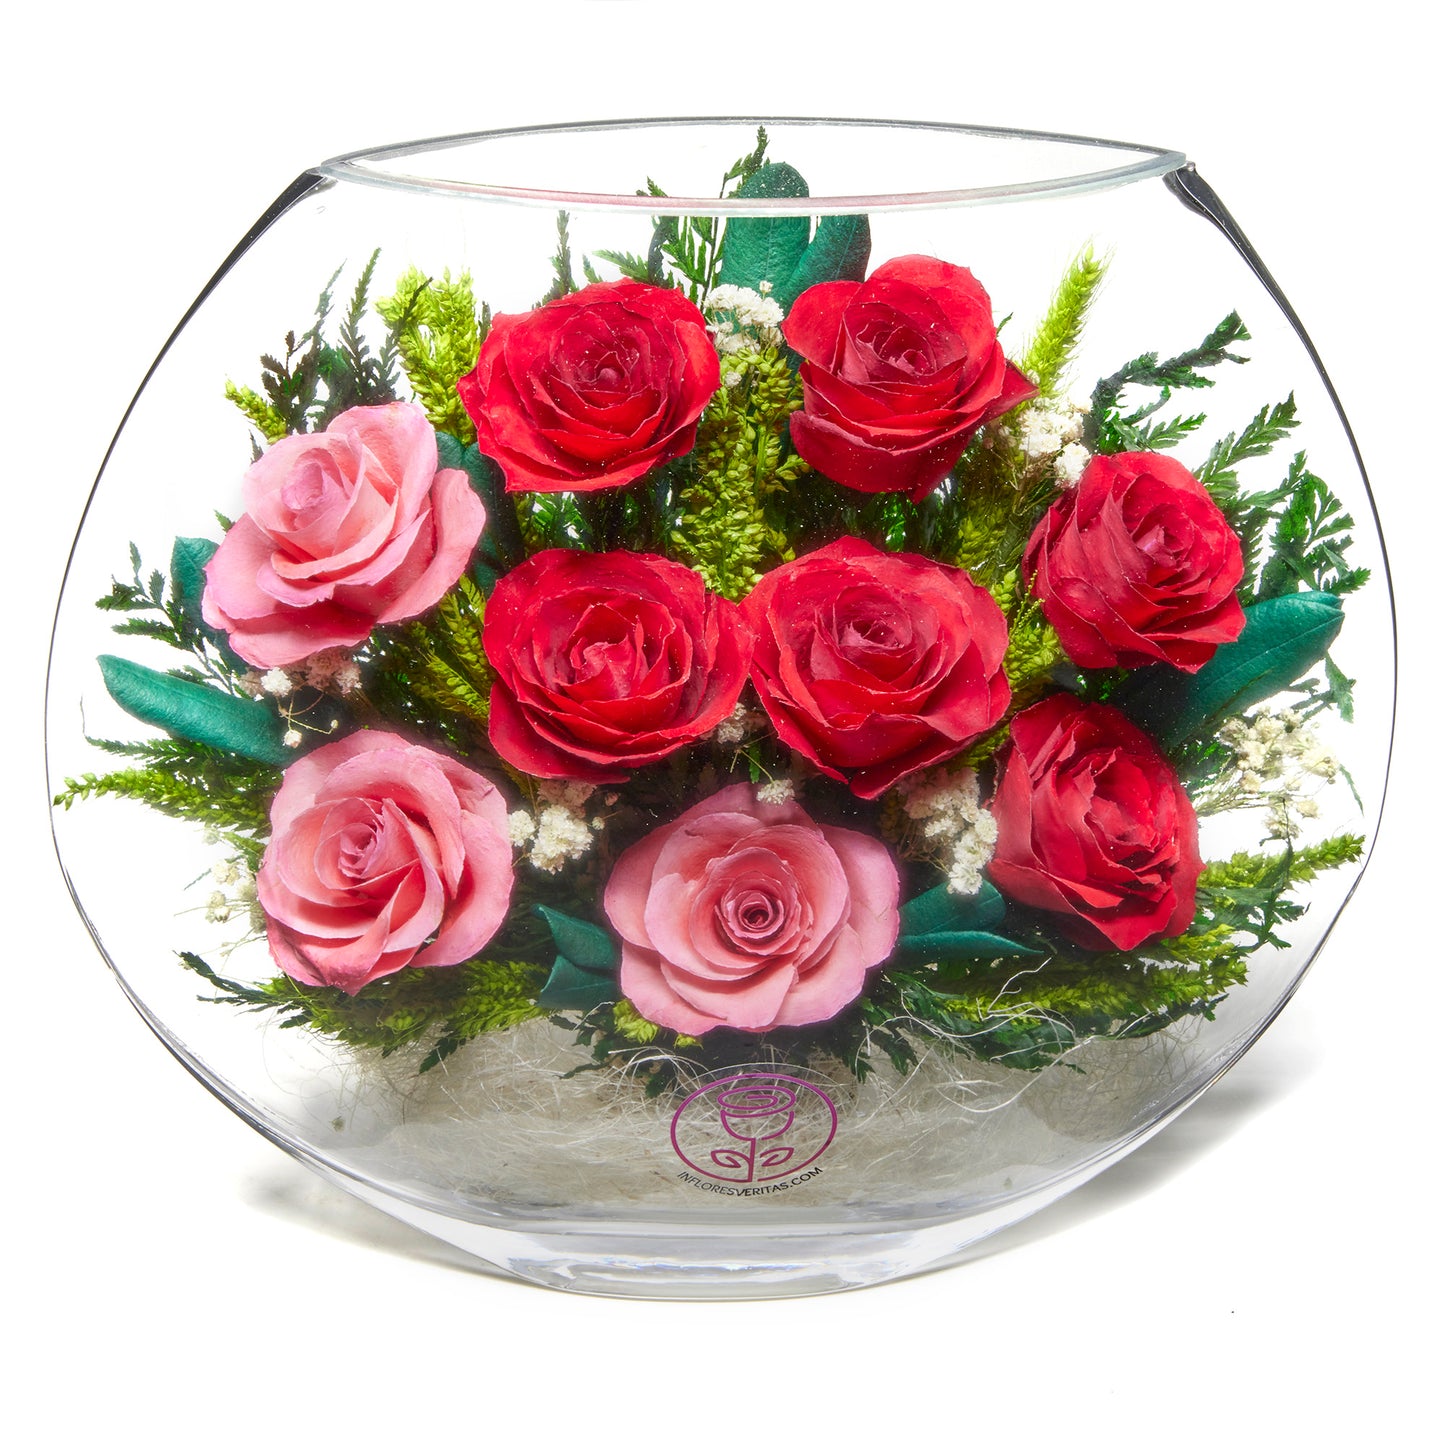 Roses Bouquet Wonderland: Enchanting World of Pink & Red Roses